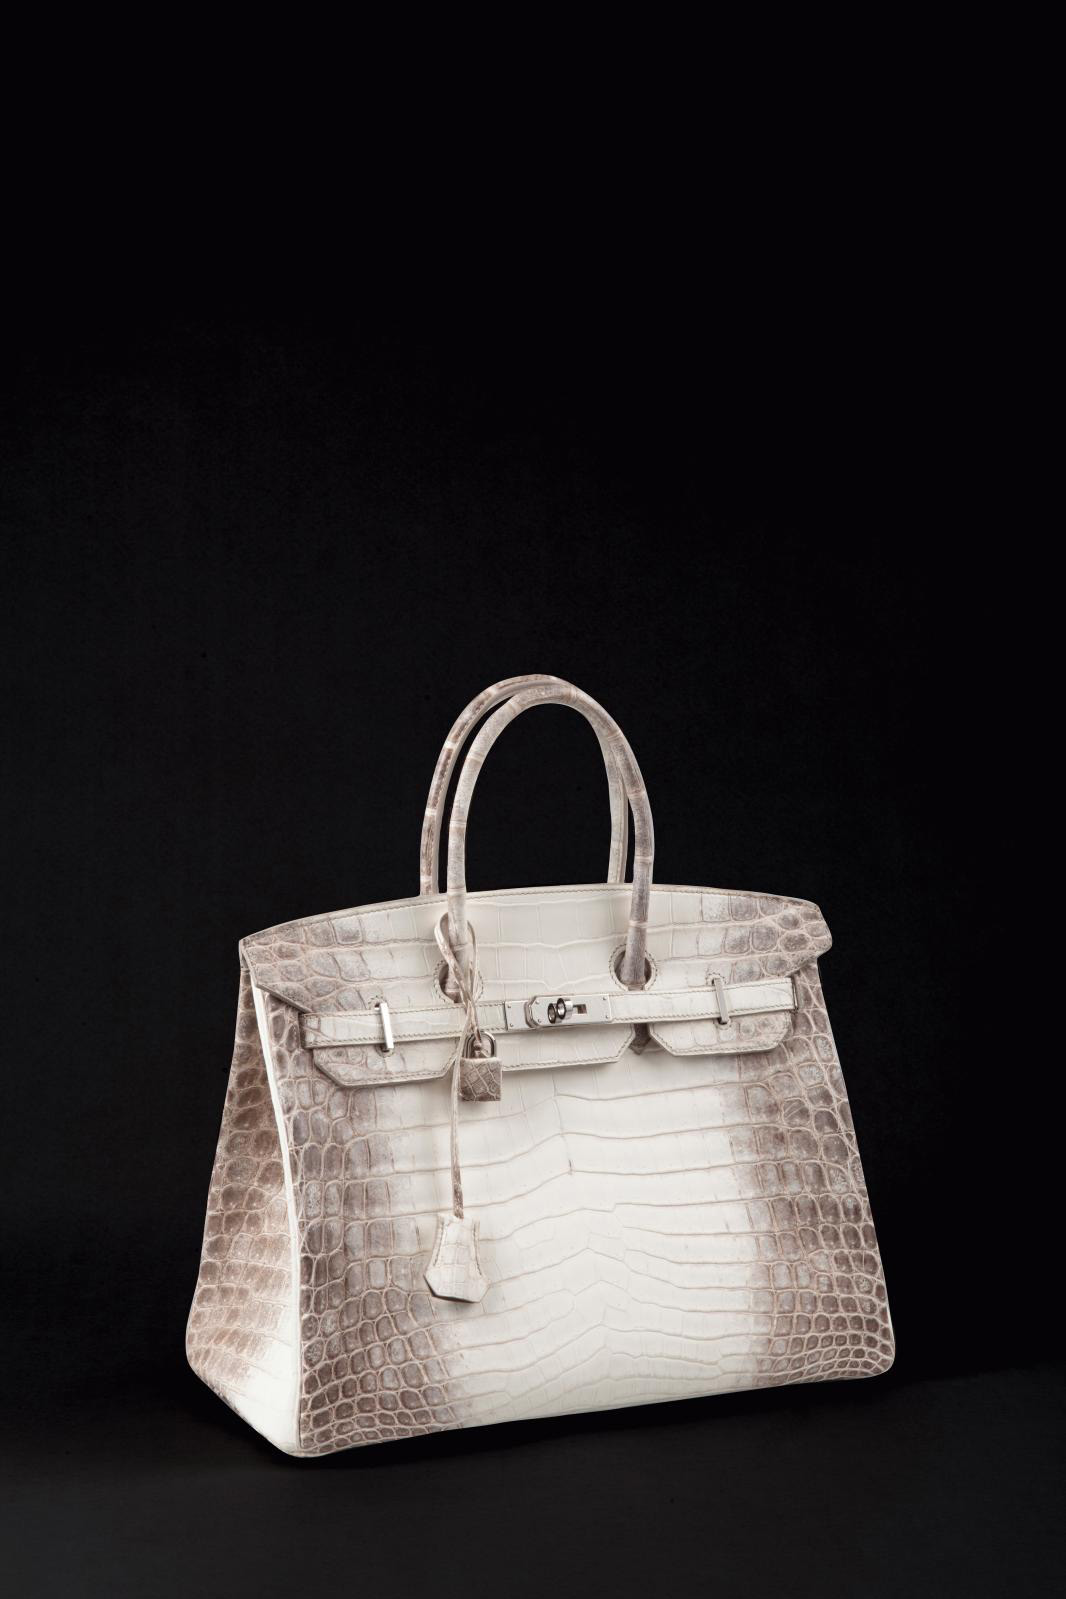 A Solid Investment: The Hermès 'Himalaya' Birkin Bag 